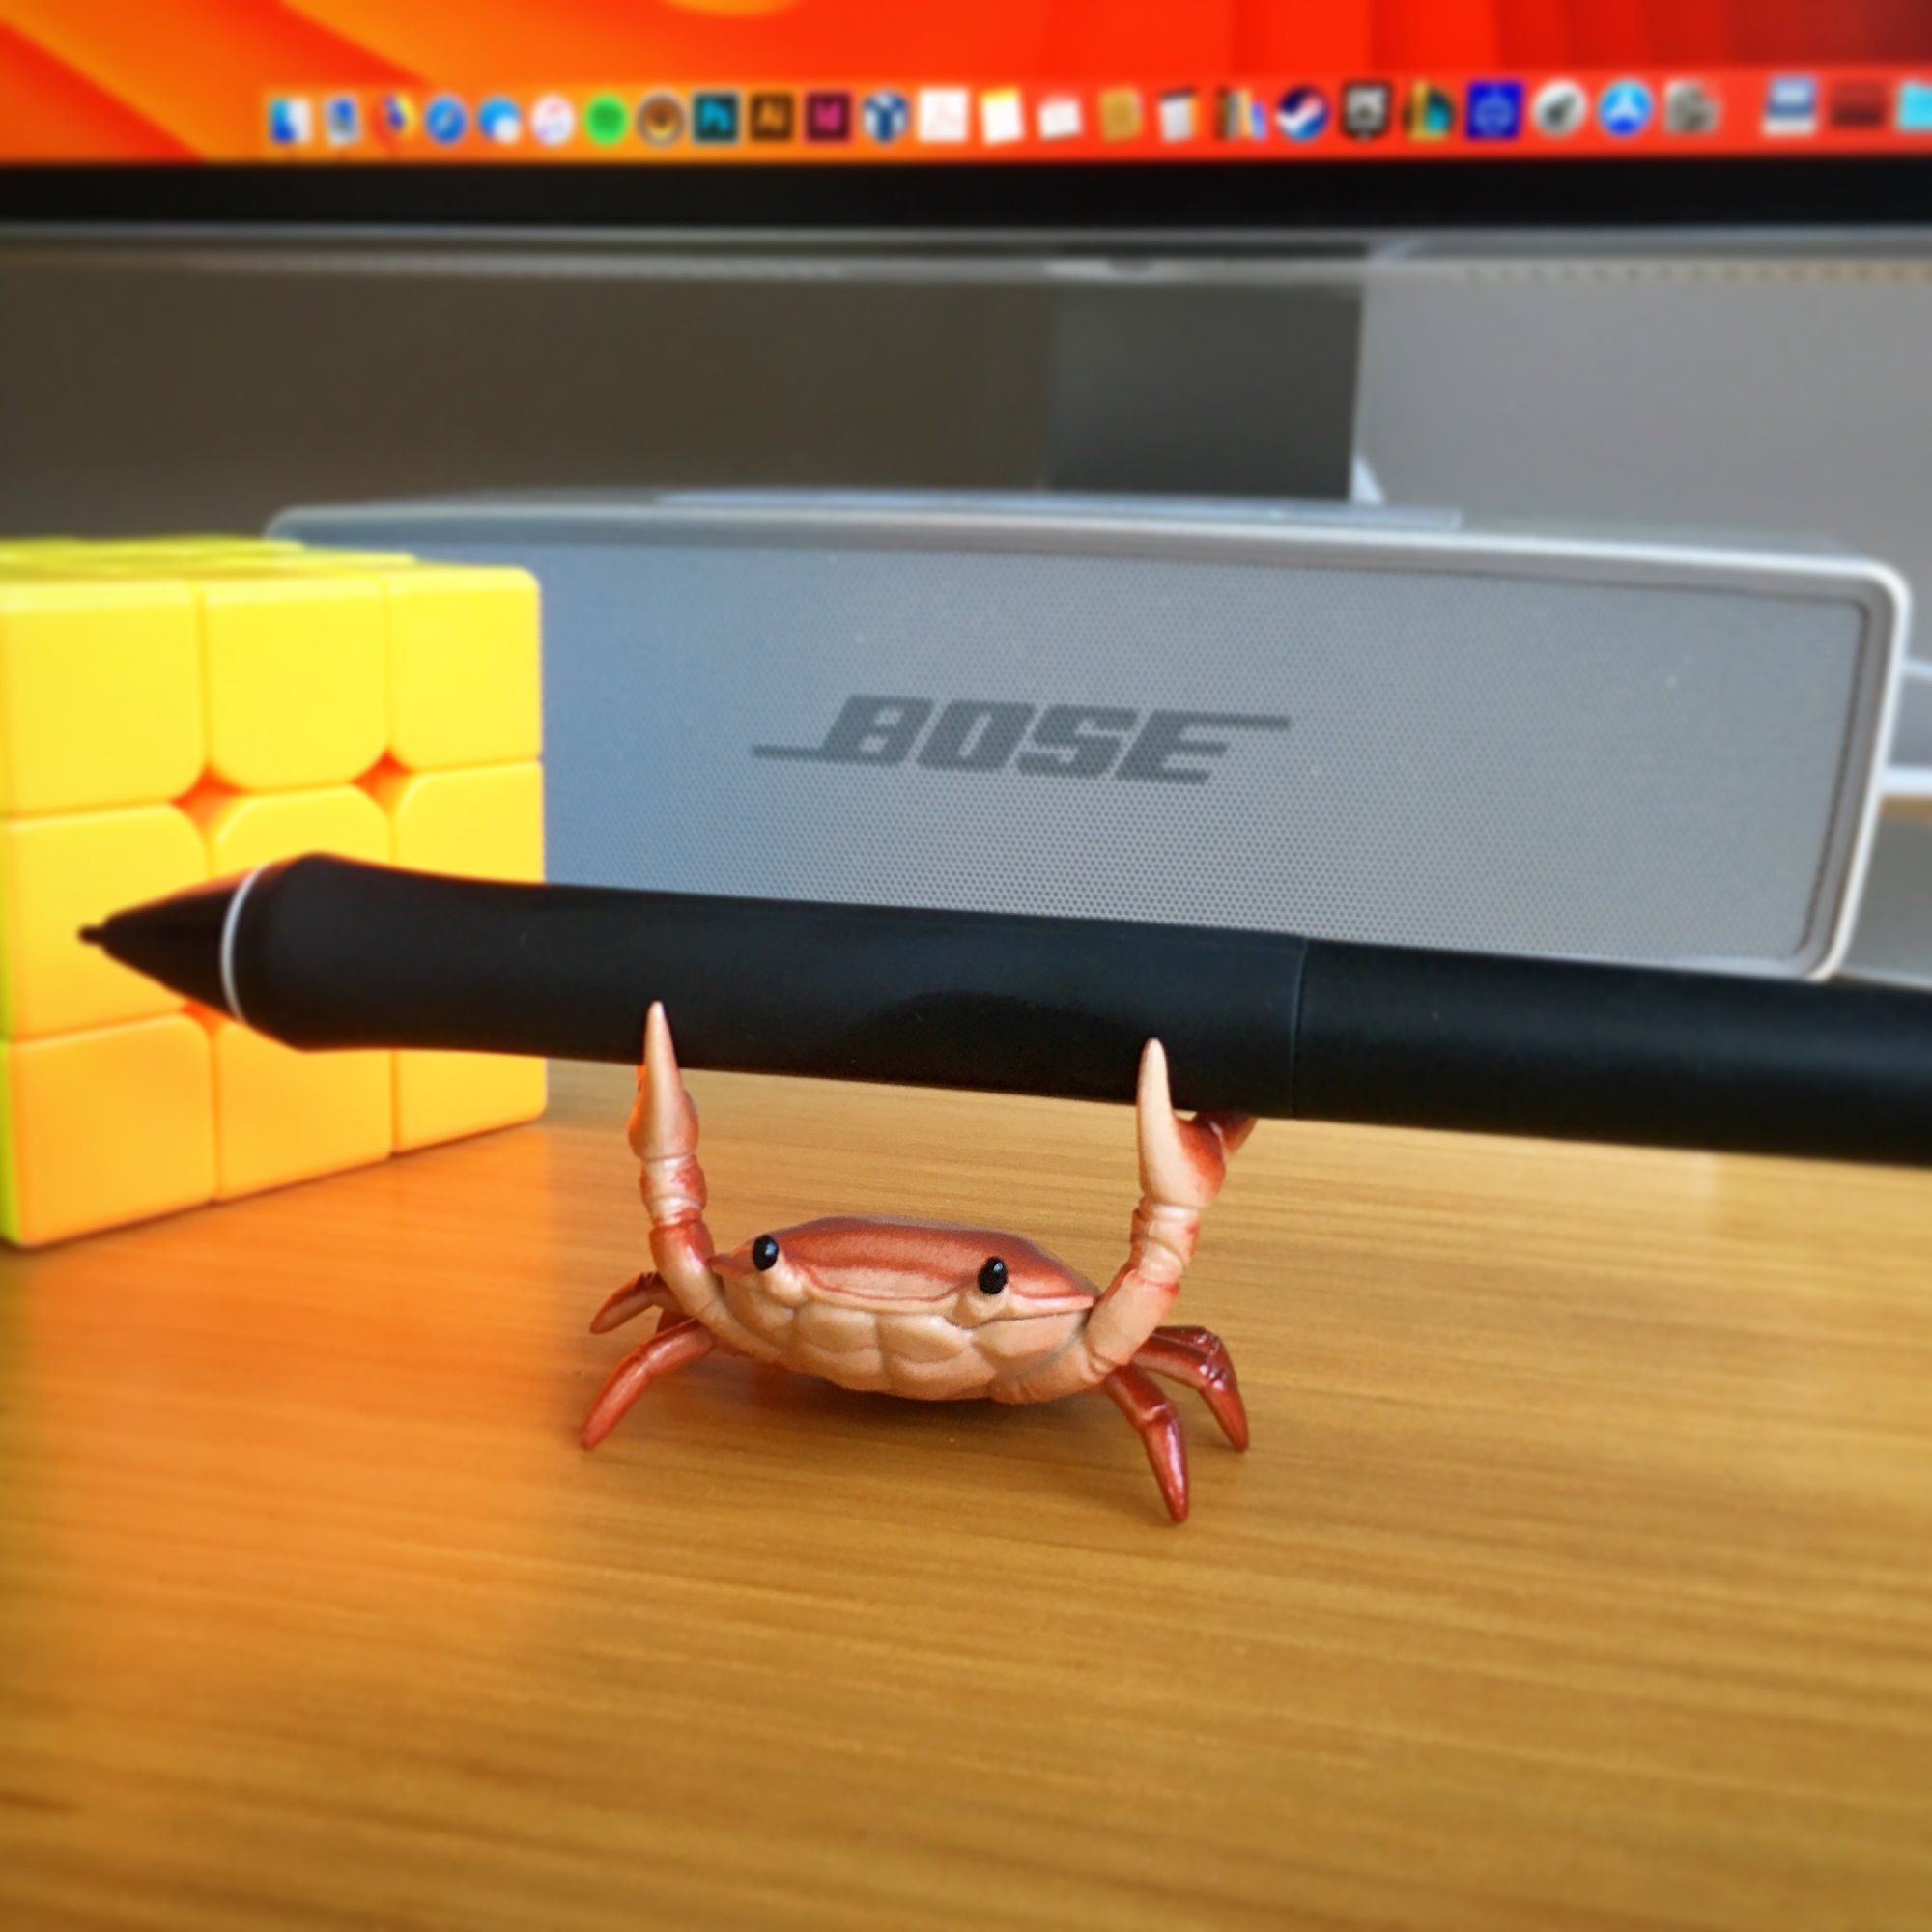 The crab pen holder holding the Wacom stylus